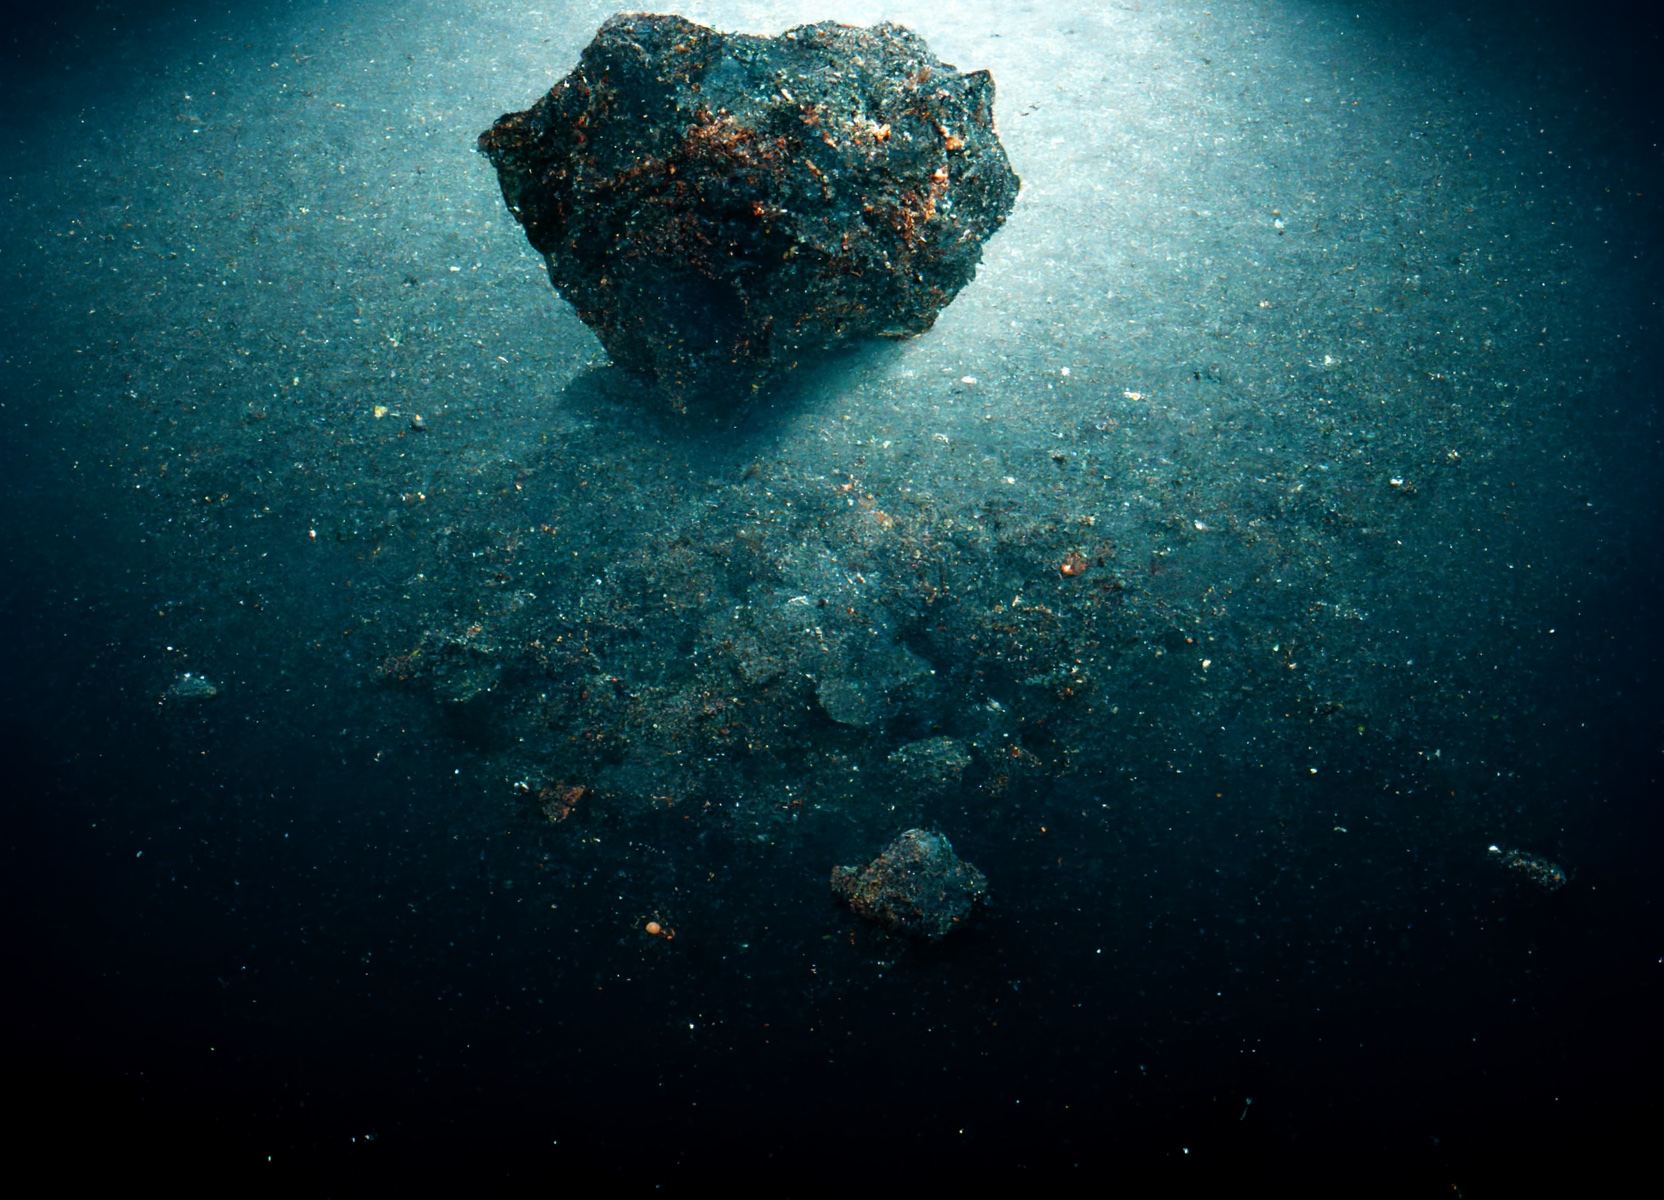 Artist's illustration of a meteorite resting on the floor of the ocean.